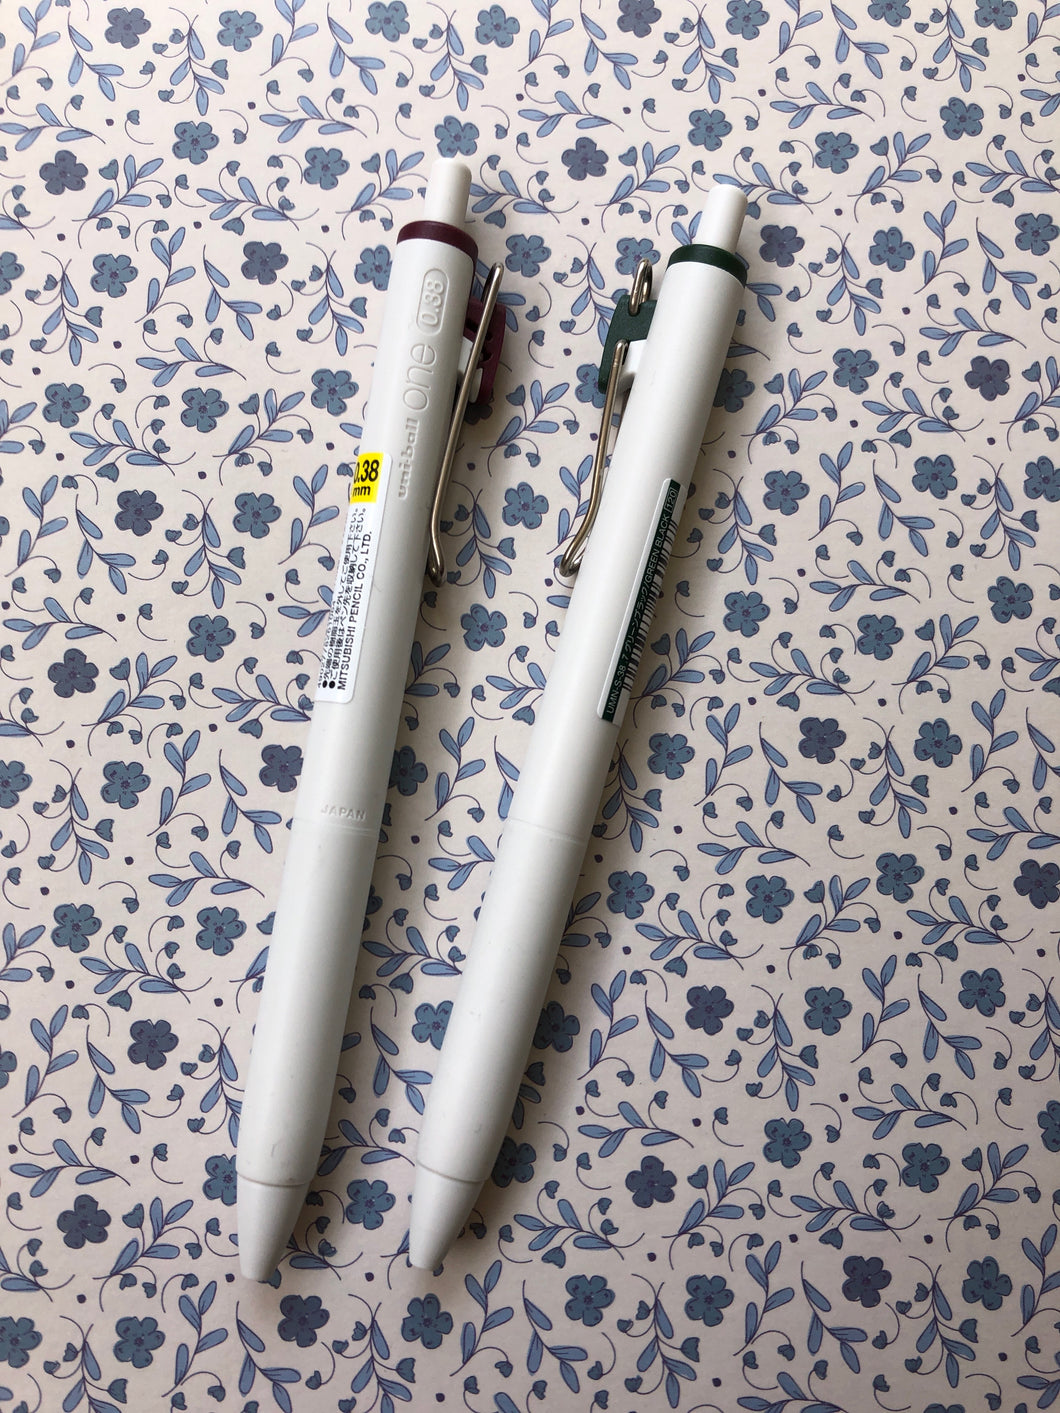 Uniball ONE pen 0.38mm